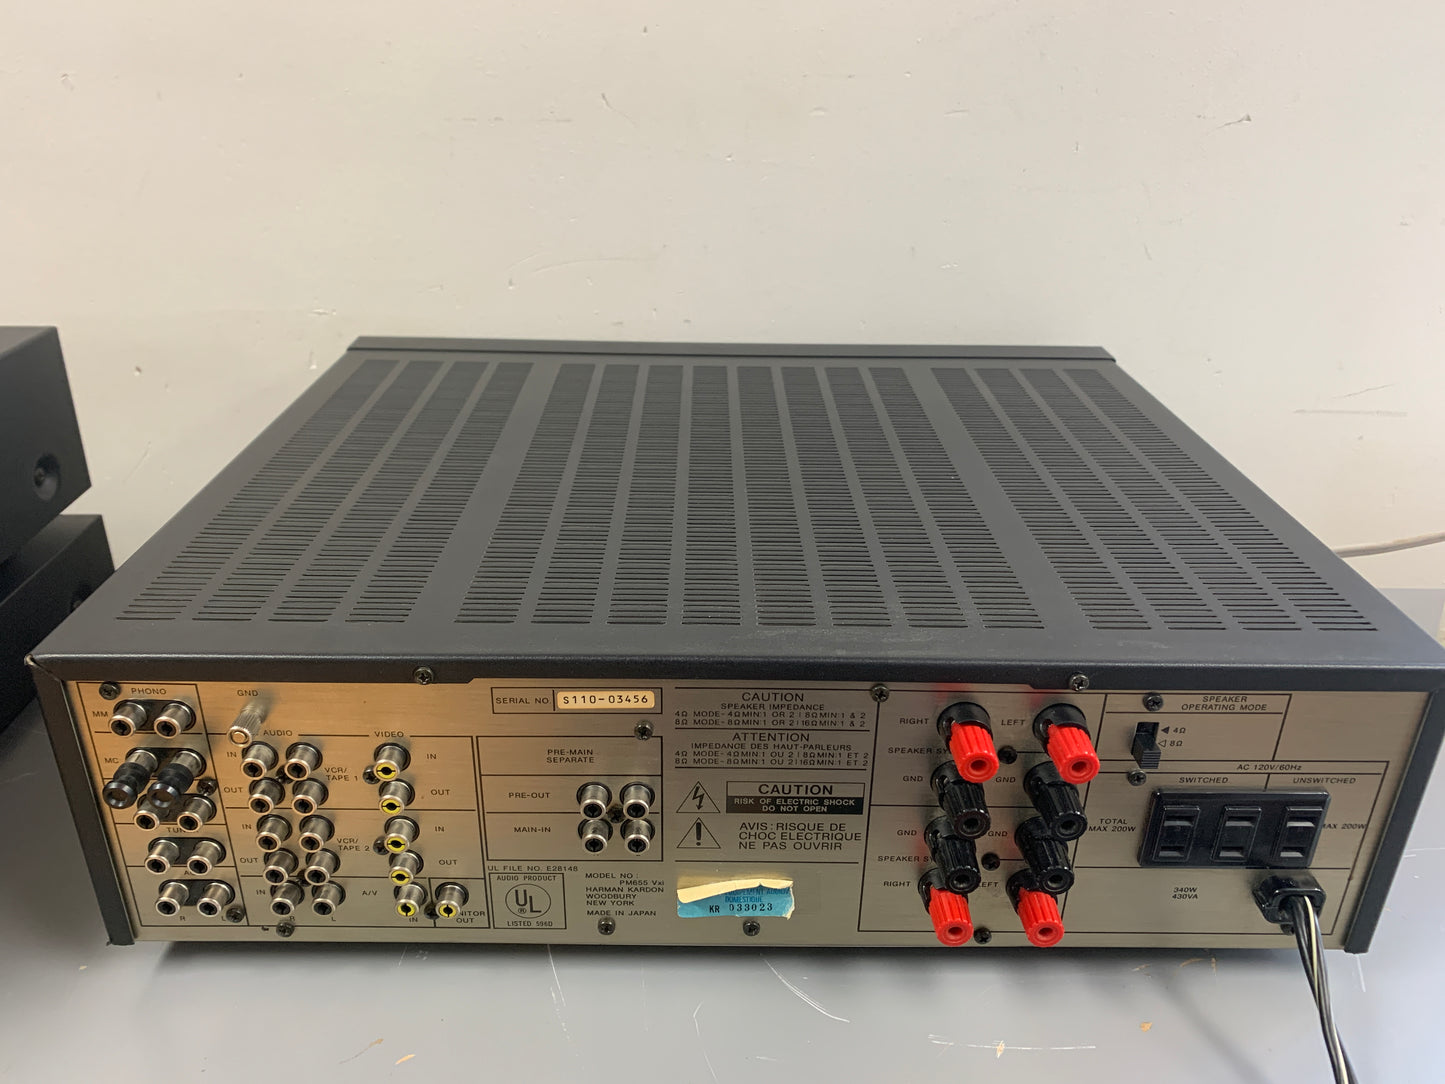 Harman Kardon PM655VXi  Integrated Amplifier